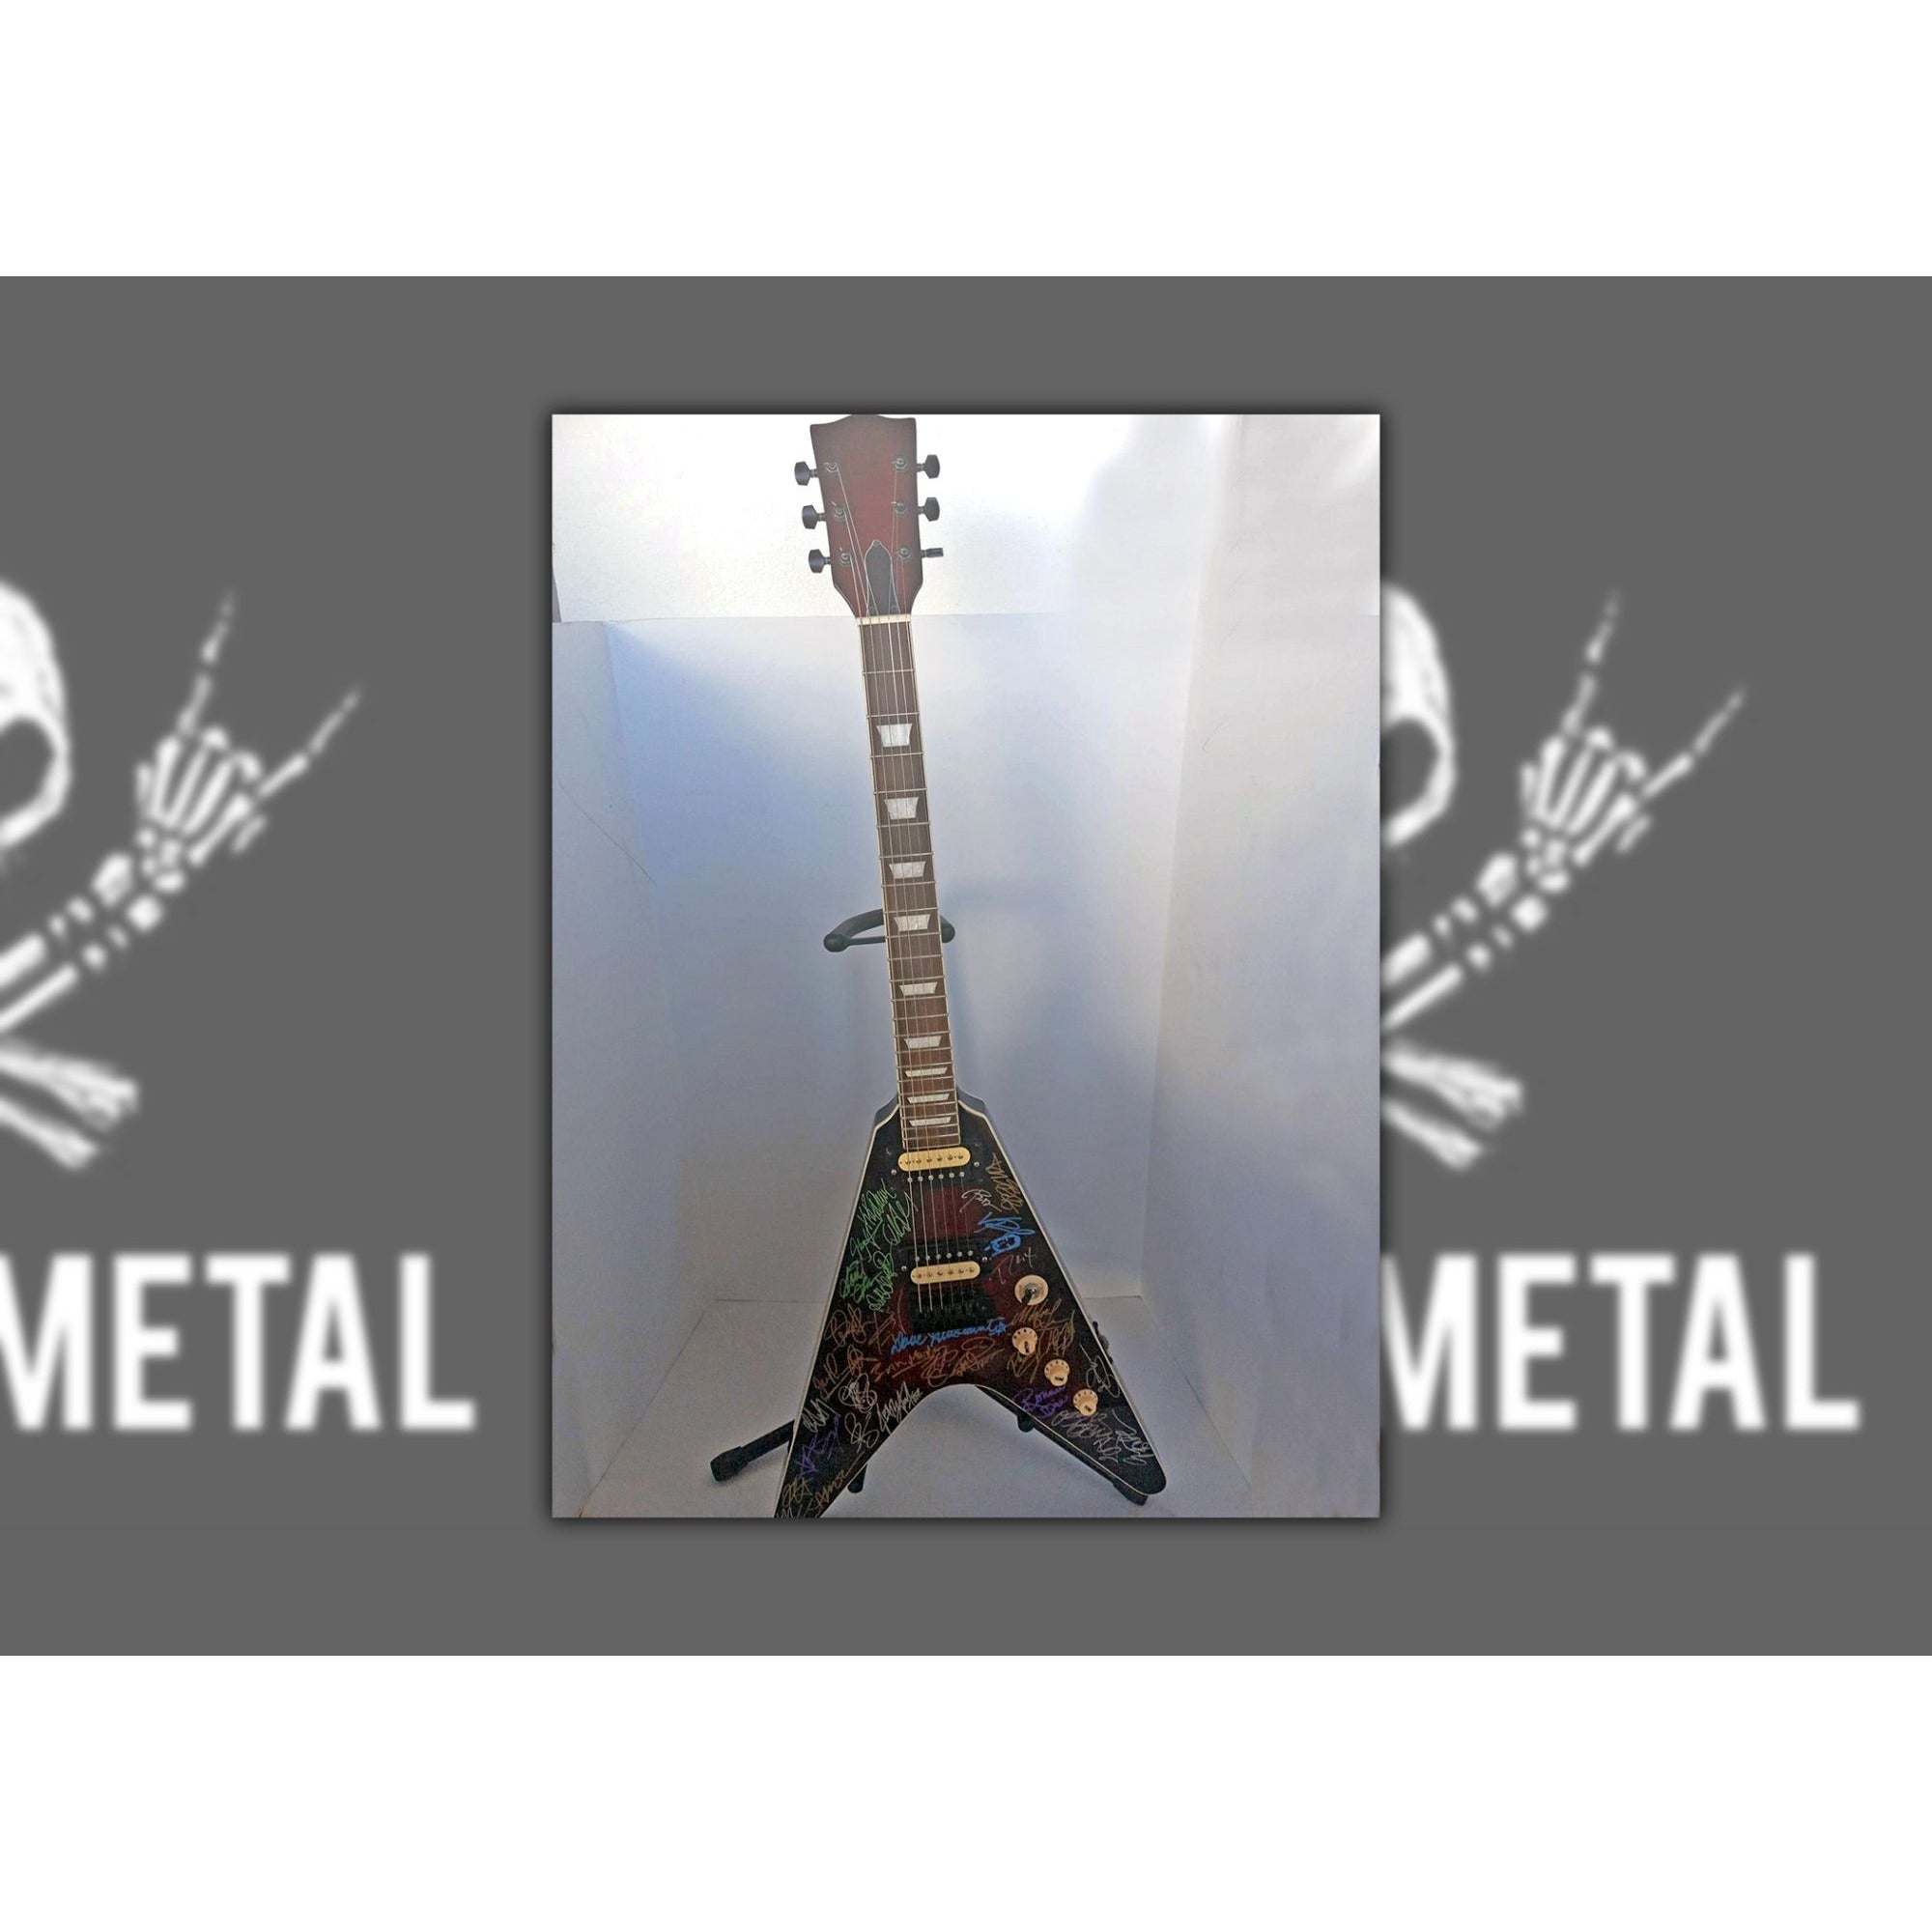 Metallica, Pantera, Judas Priest, Black Sabbath, Iron Maiden V electric guitar signed with proof